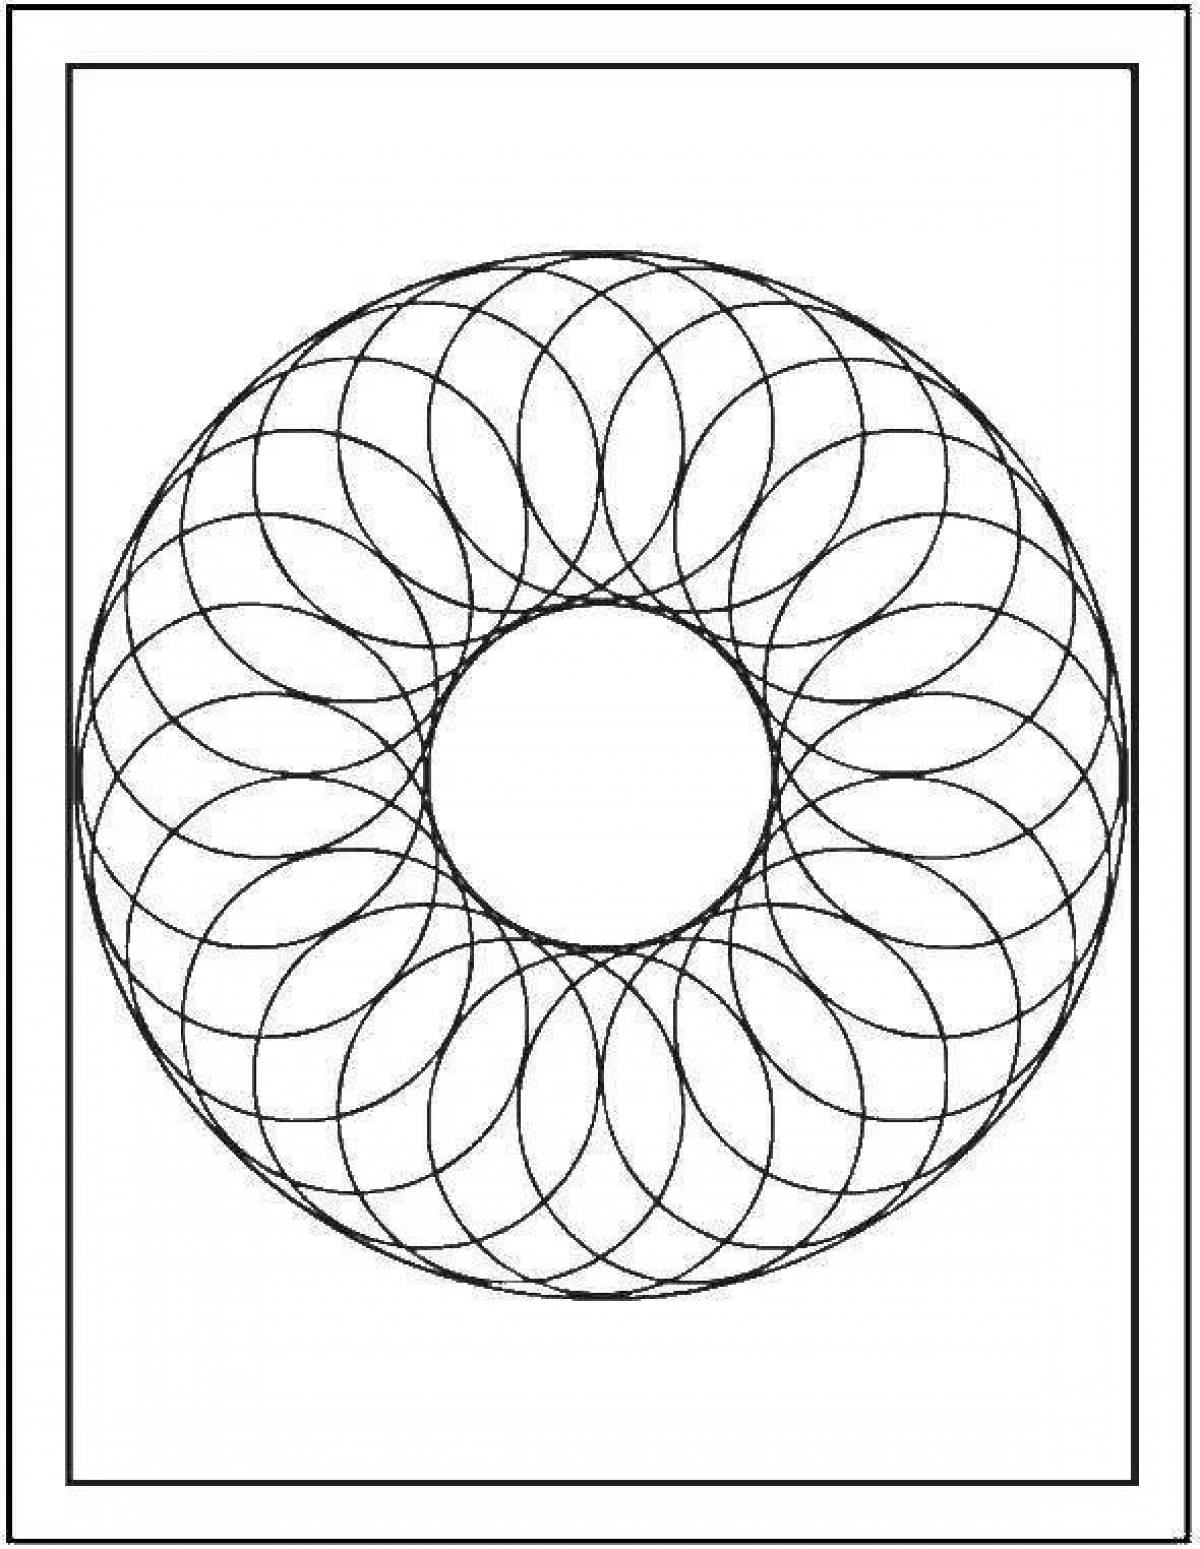 Coloring page bold circular pattern